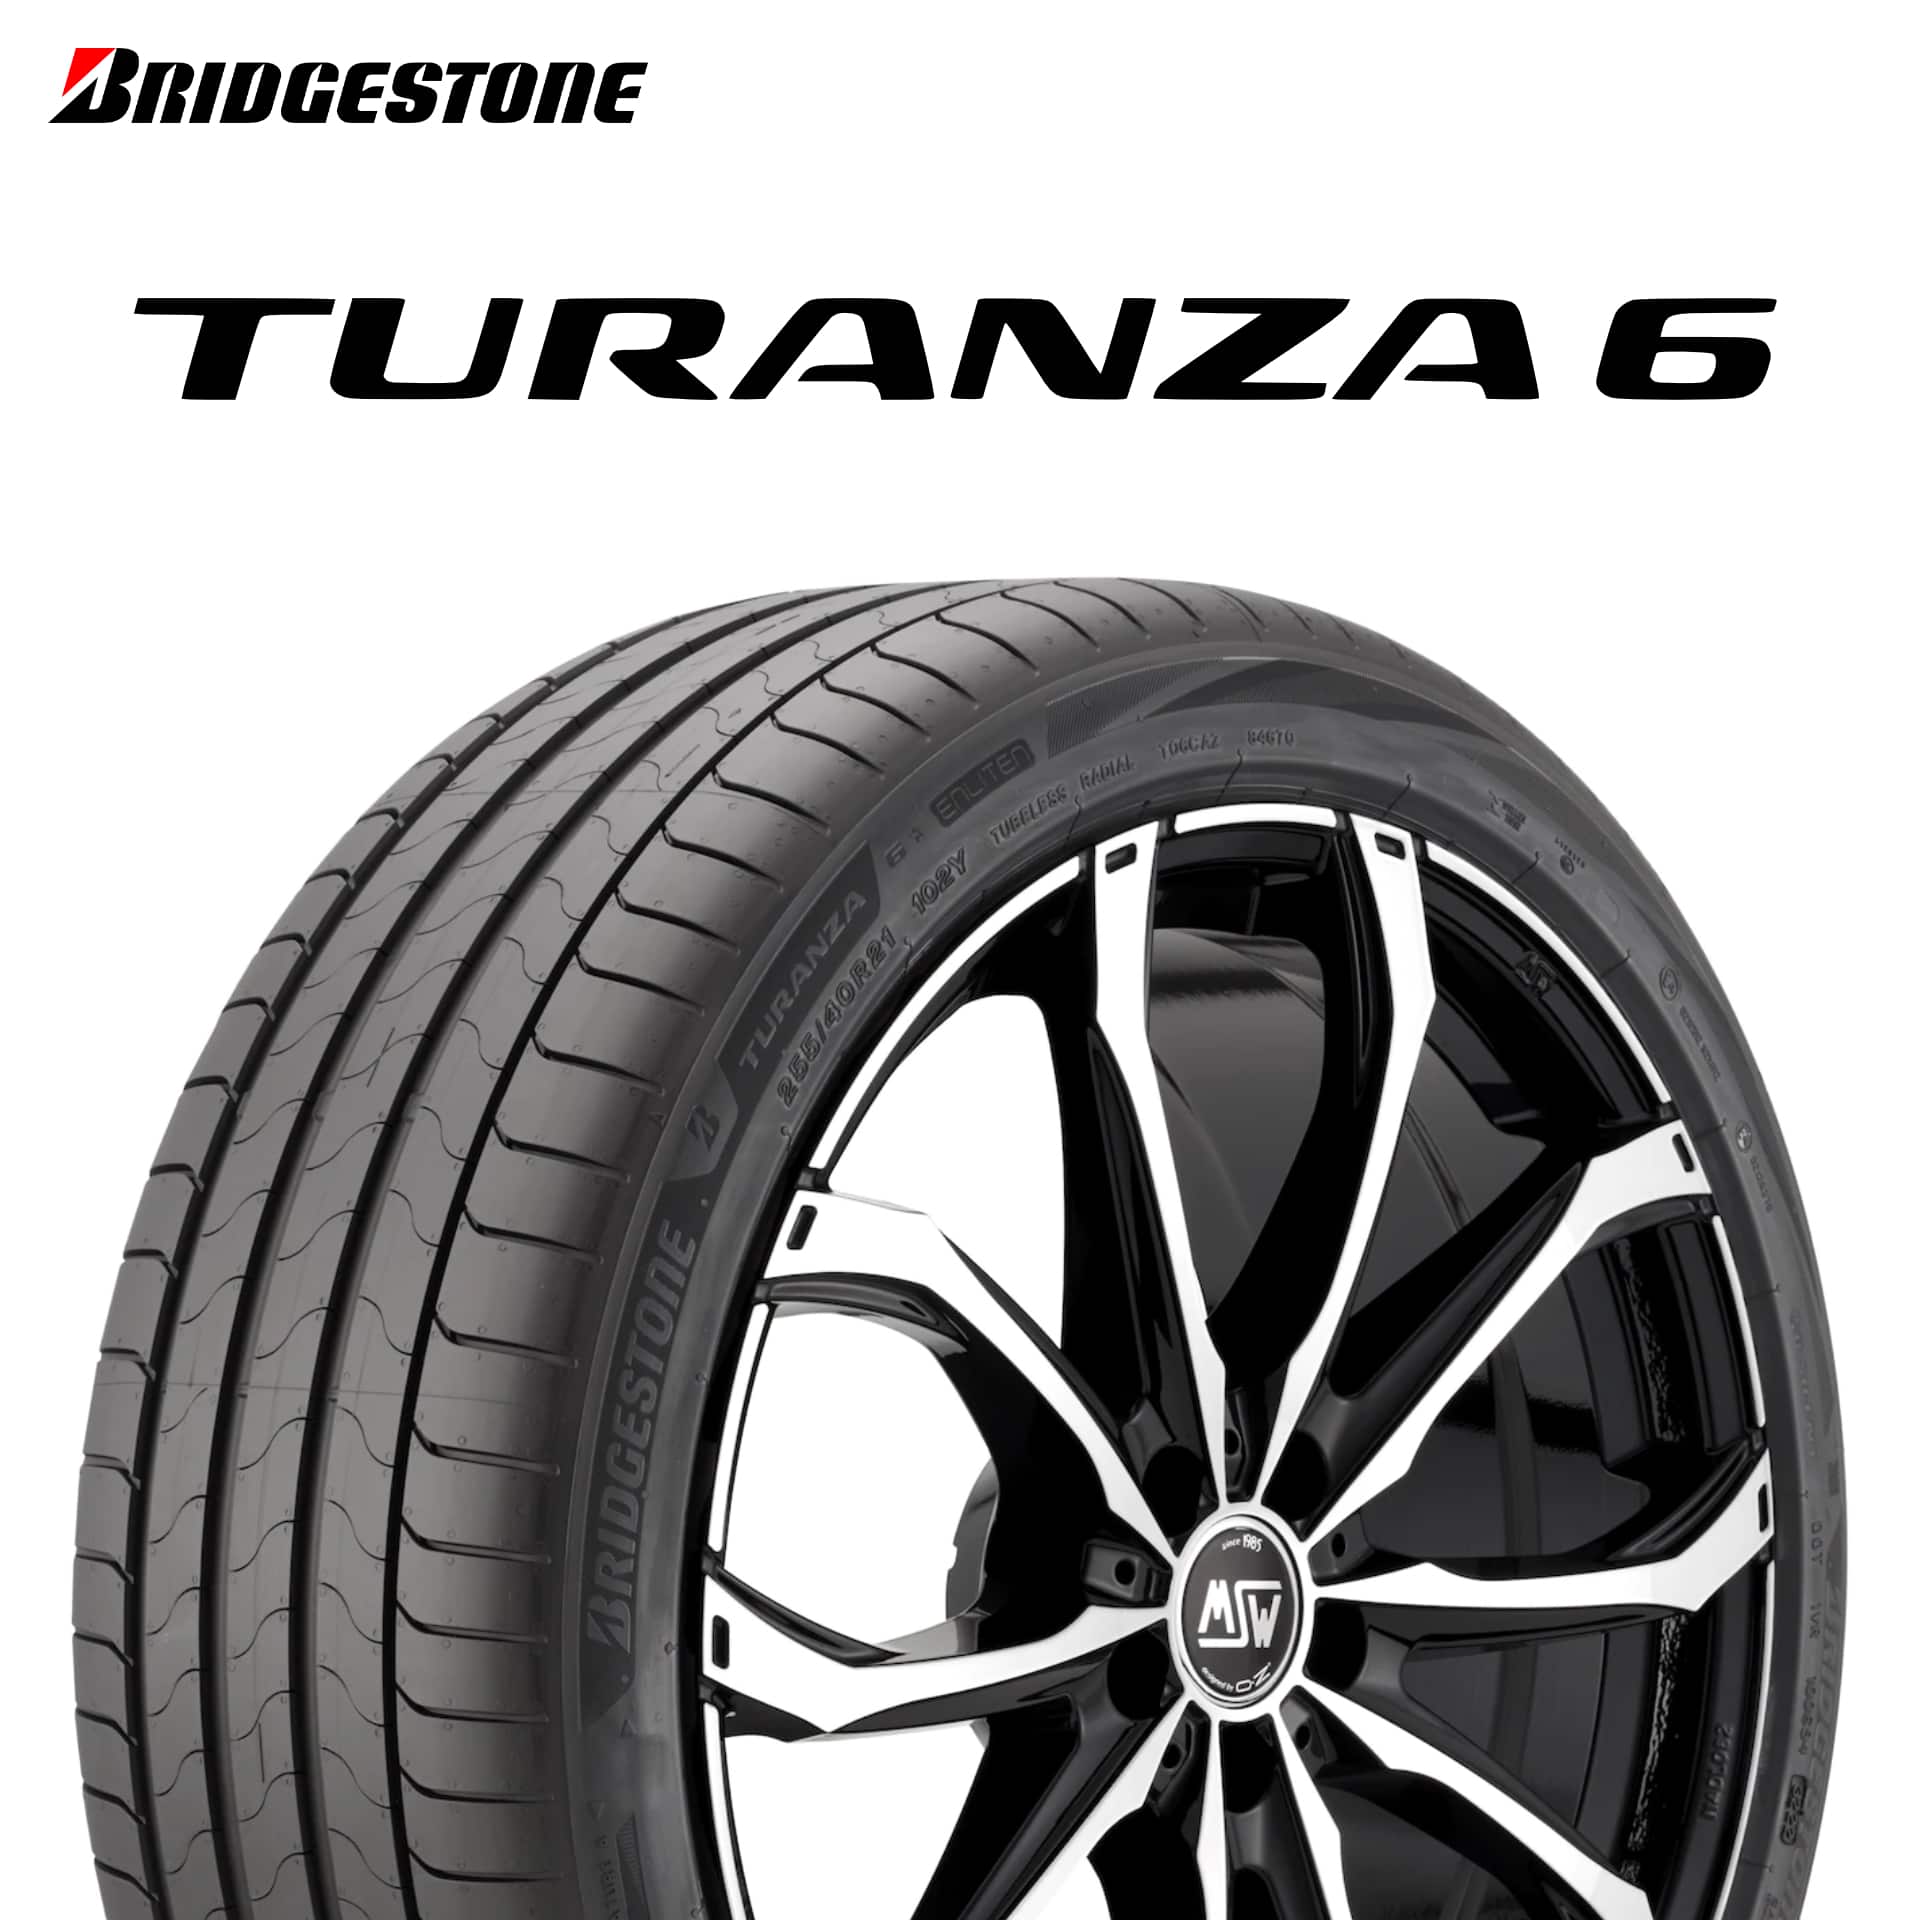 Bridgestone turanza 215/45r17